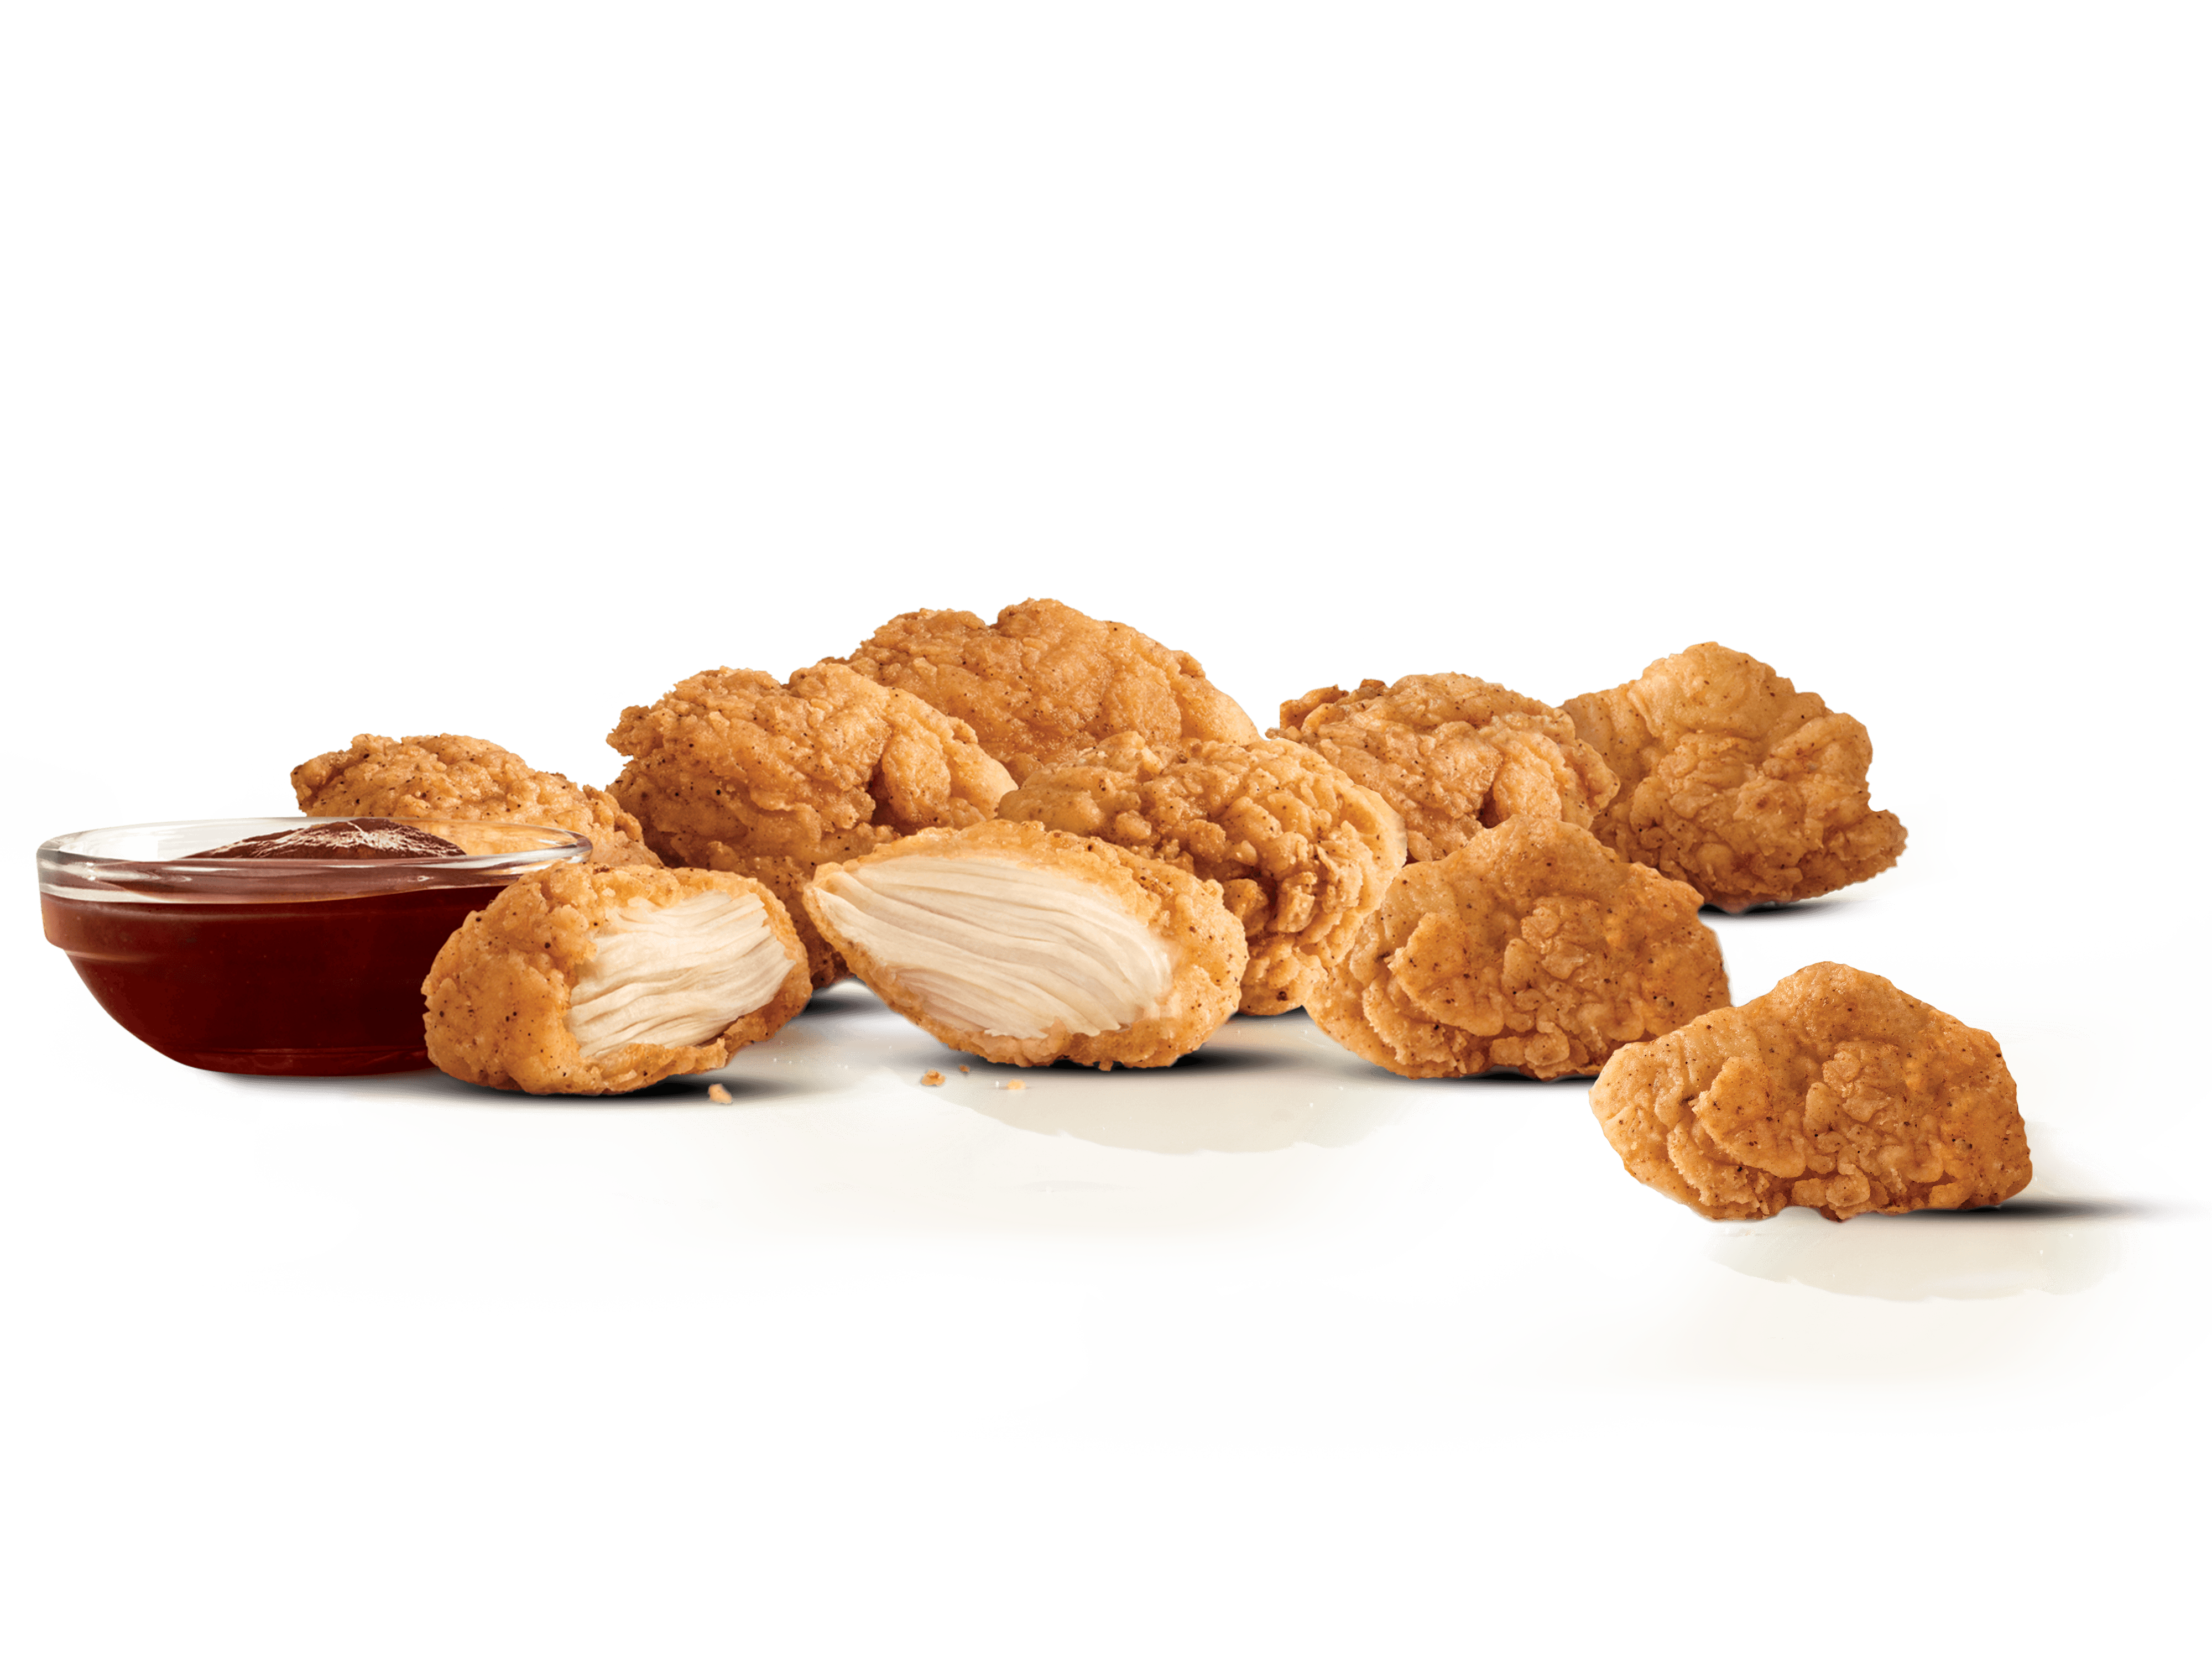 Arby's 9 Piece Premium Chicken Nuggets Nutrition Facts